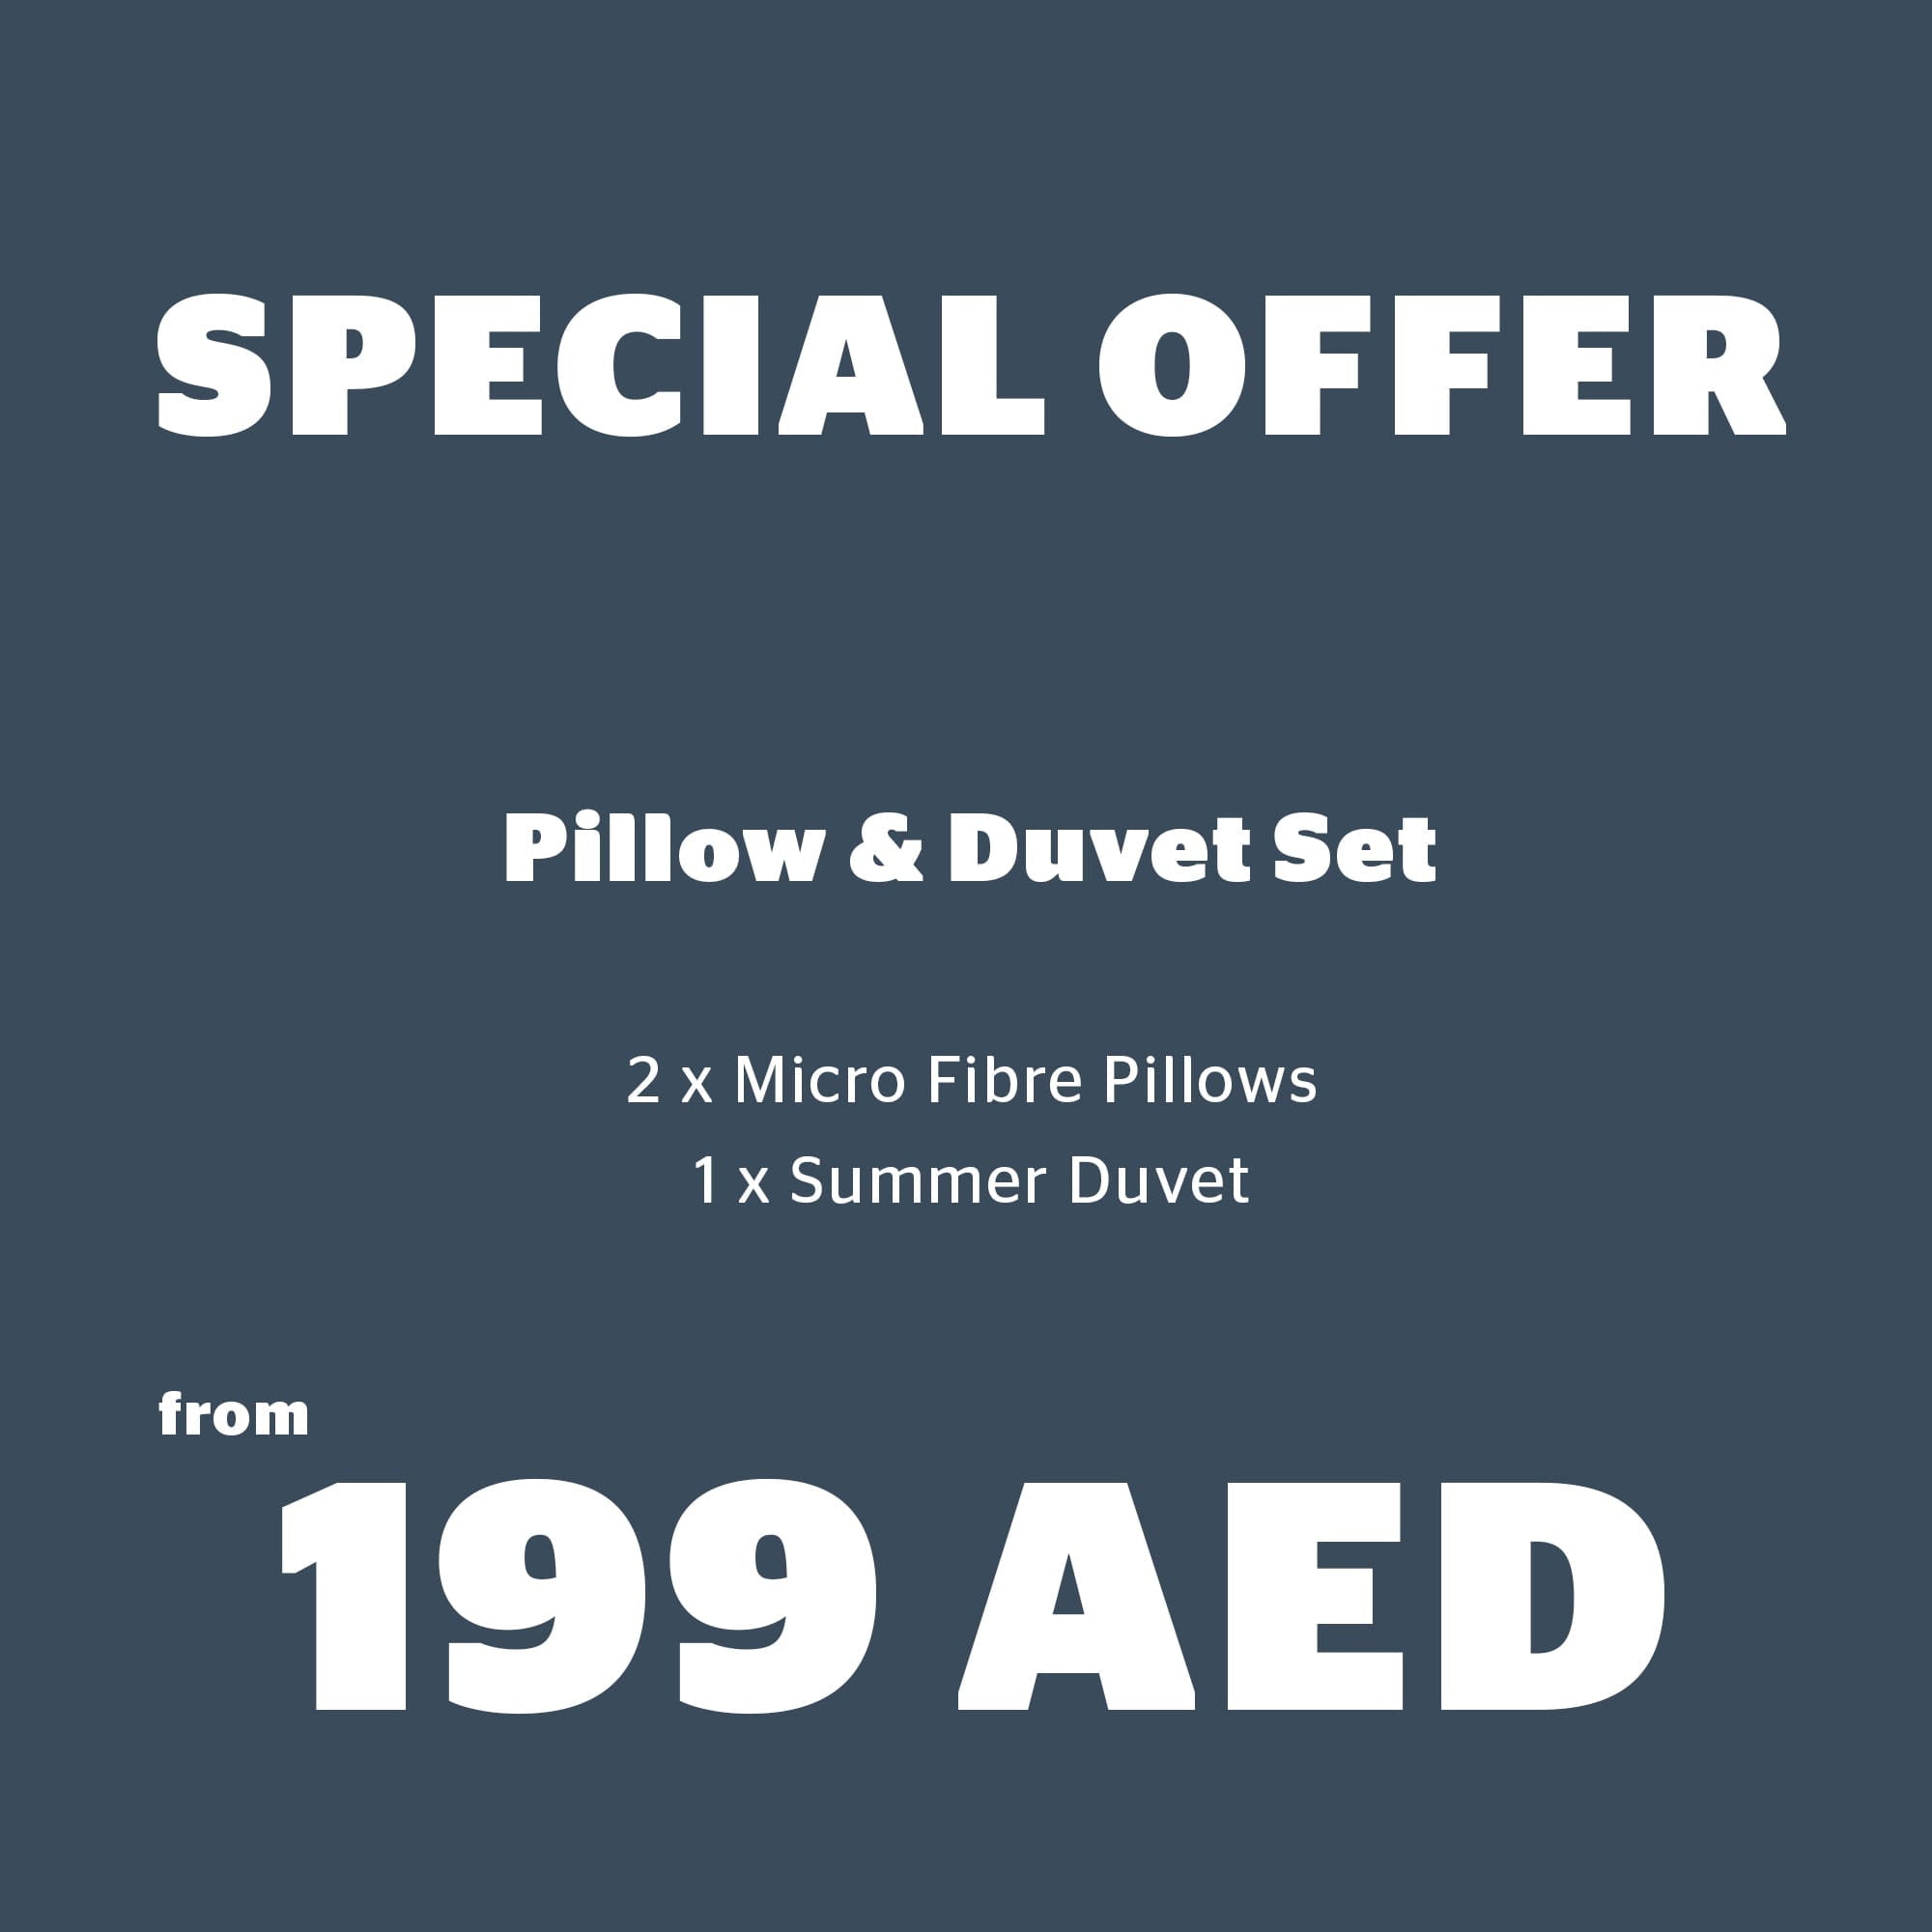 Essential Summer Duvet + Micro Fibre Pillow Value Set